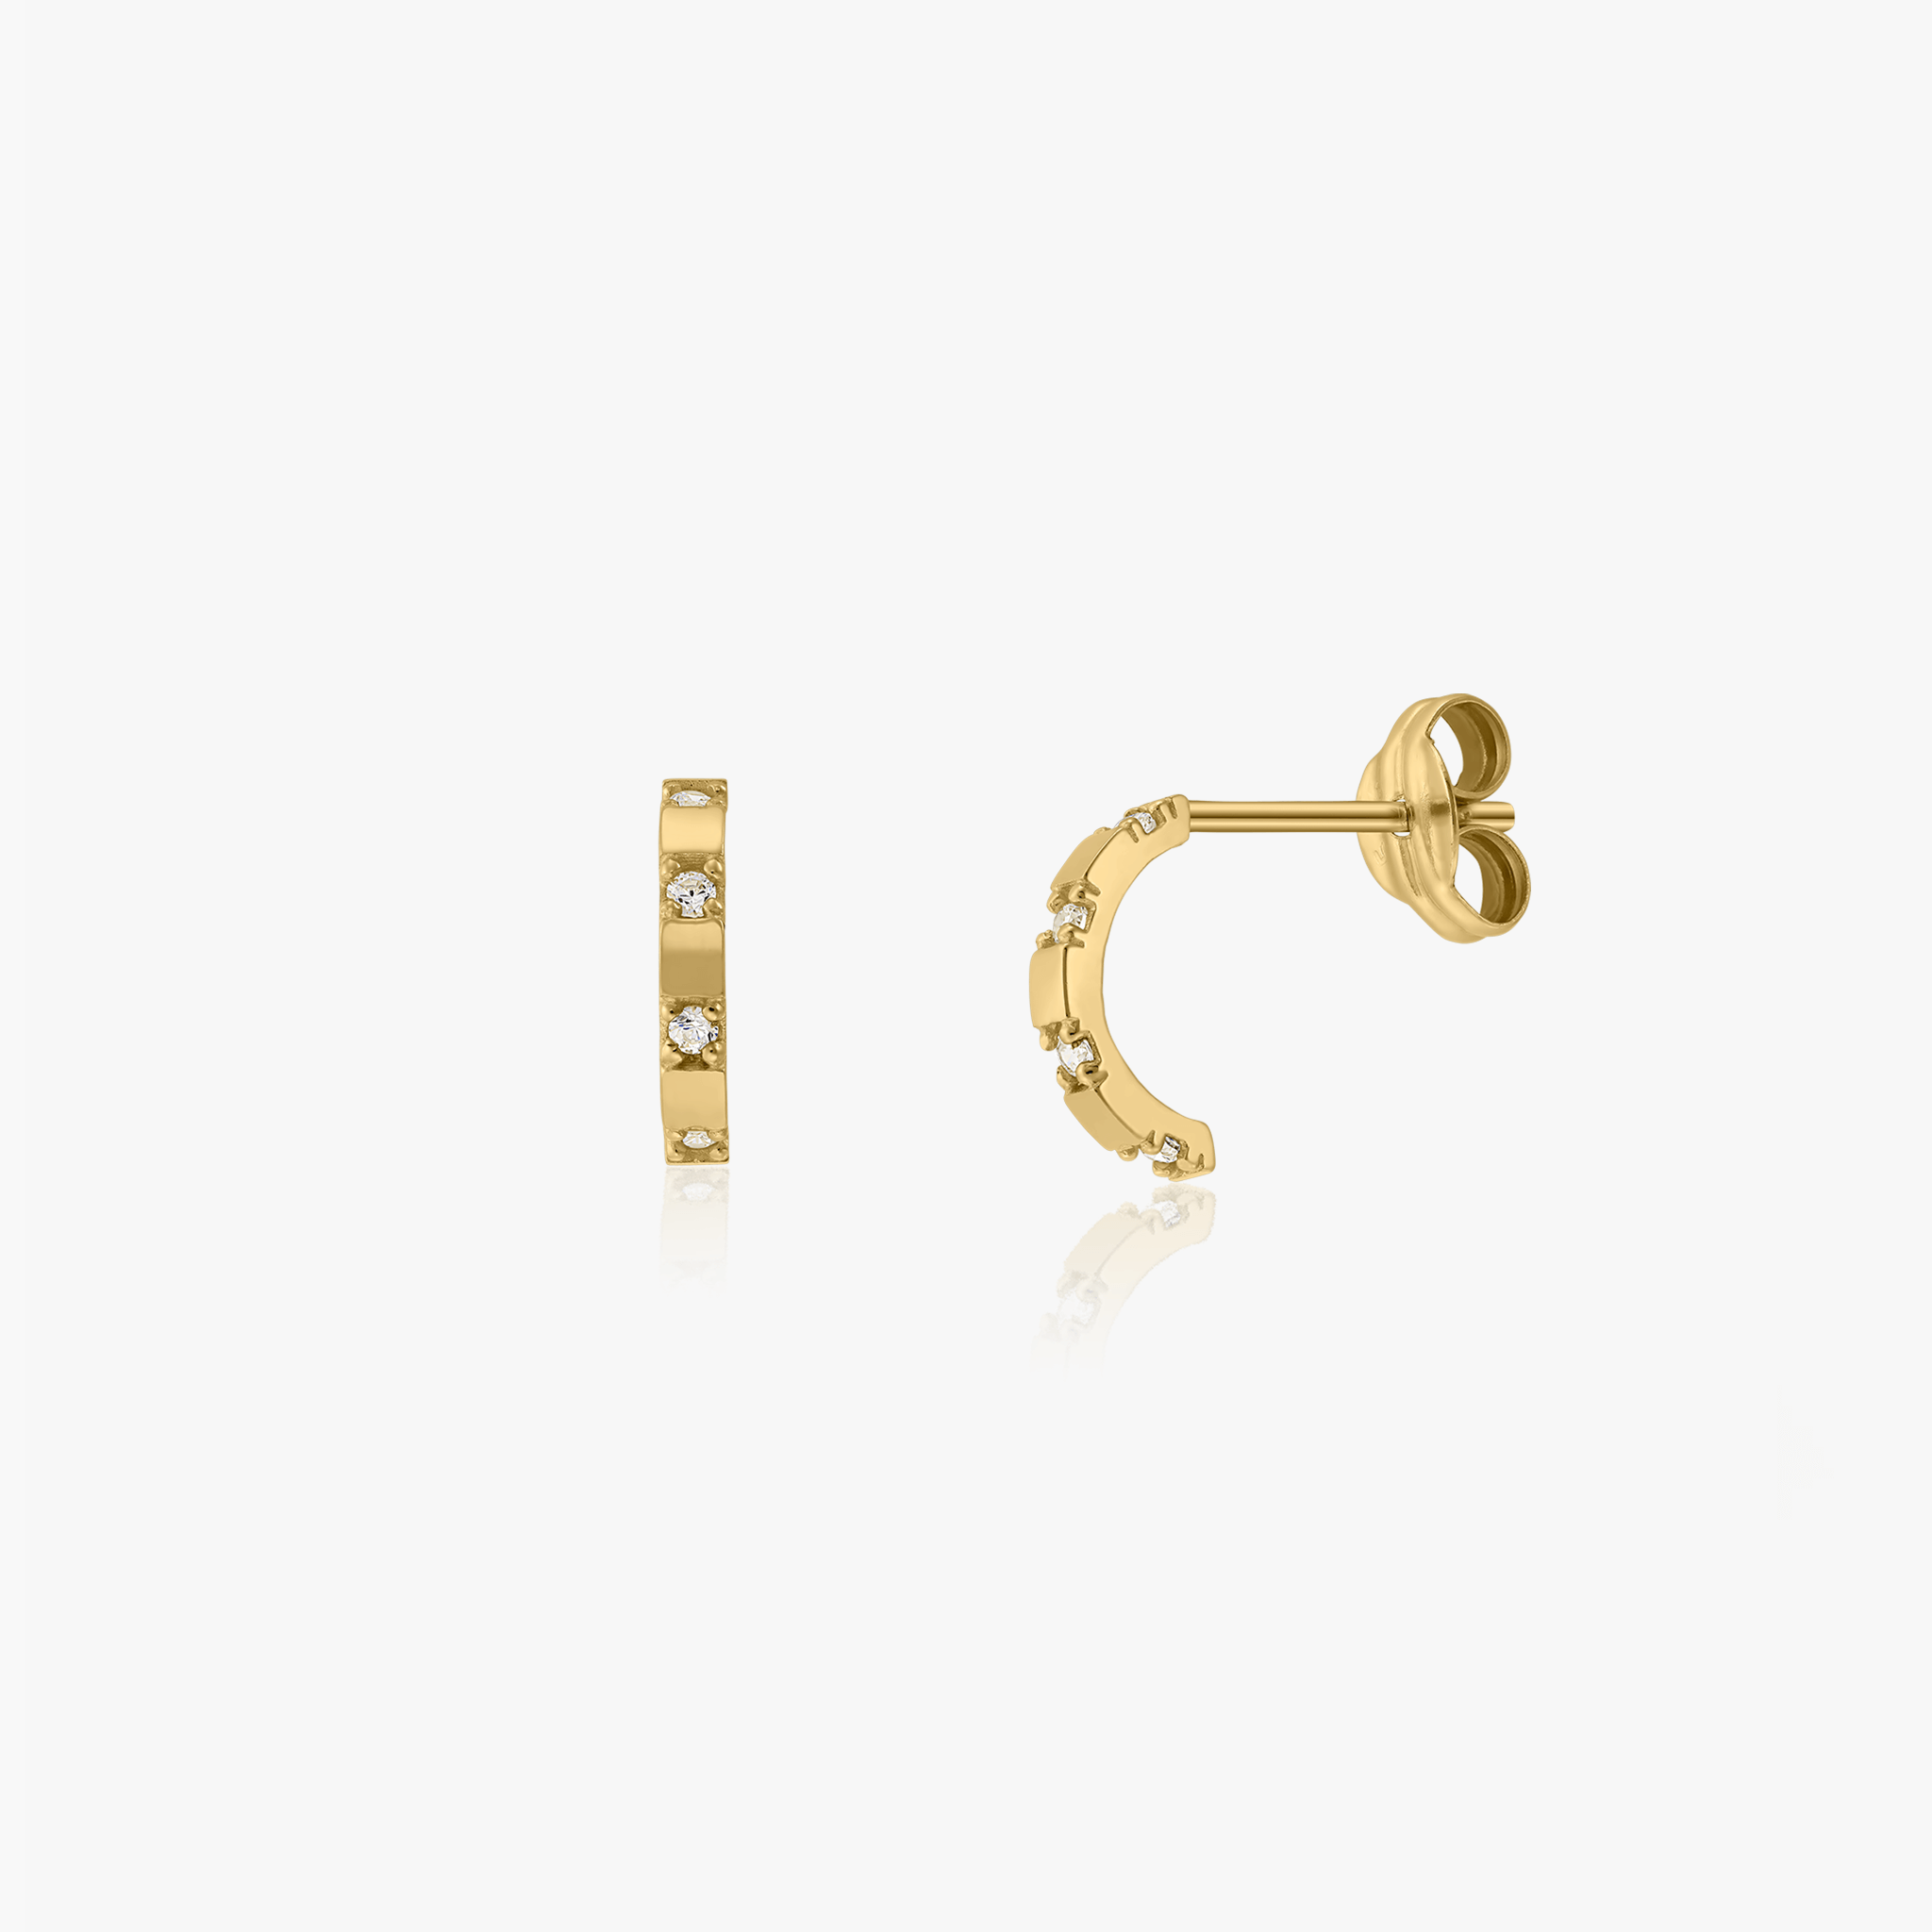 Carreau gold earrings - Zirconium